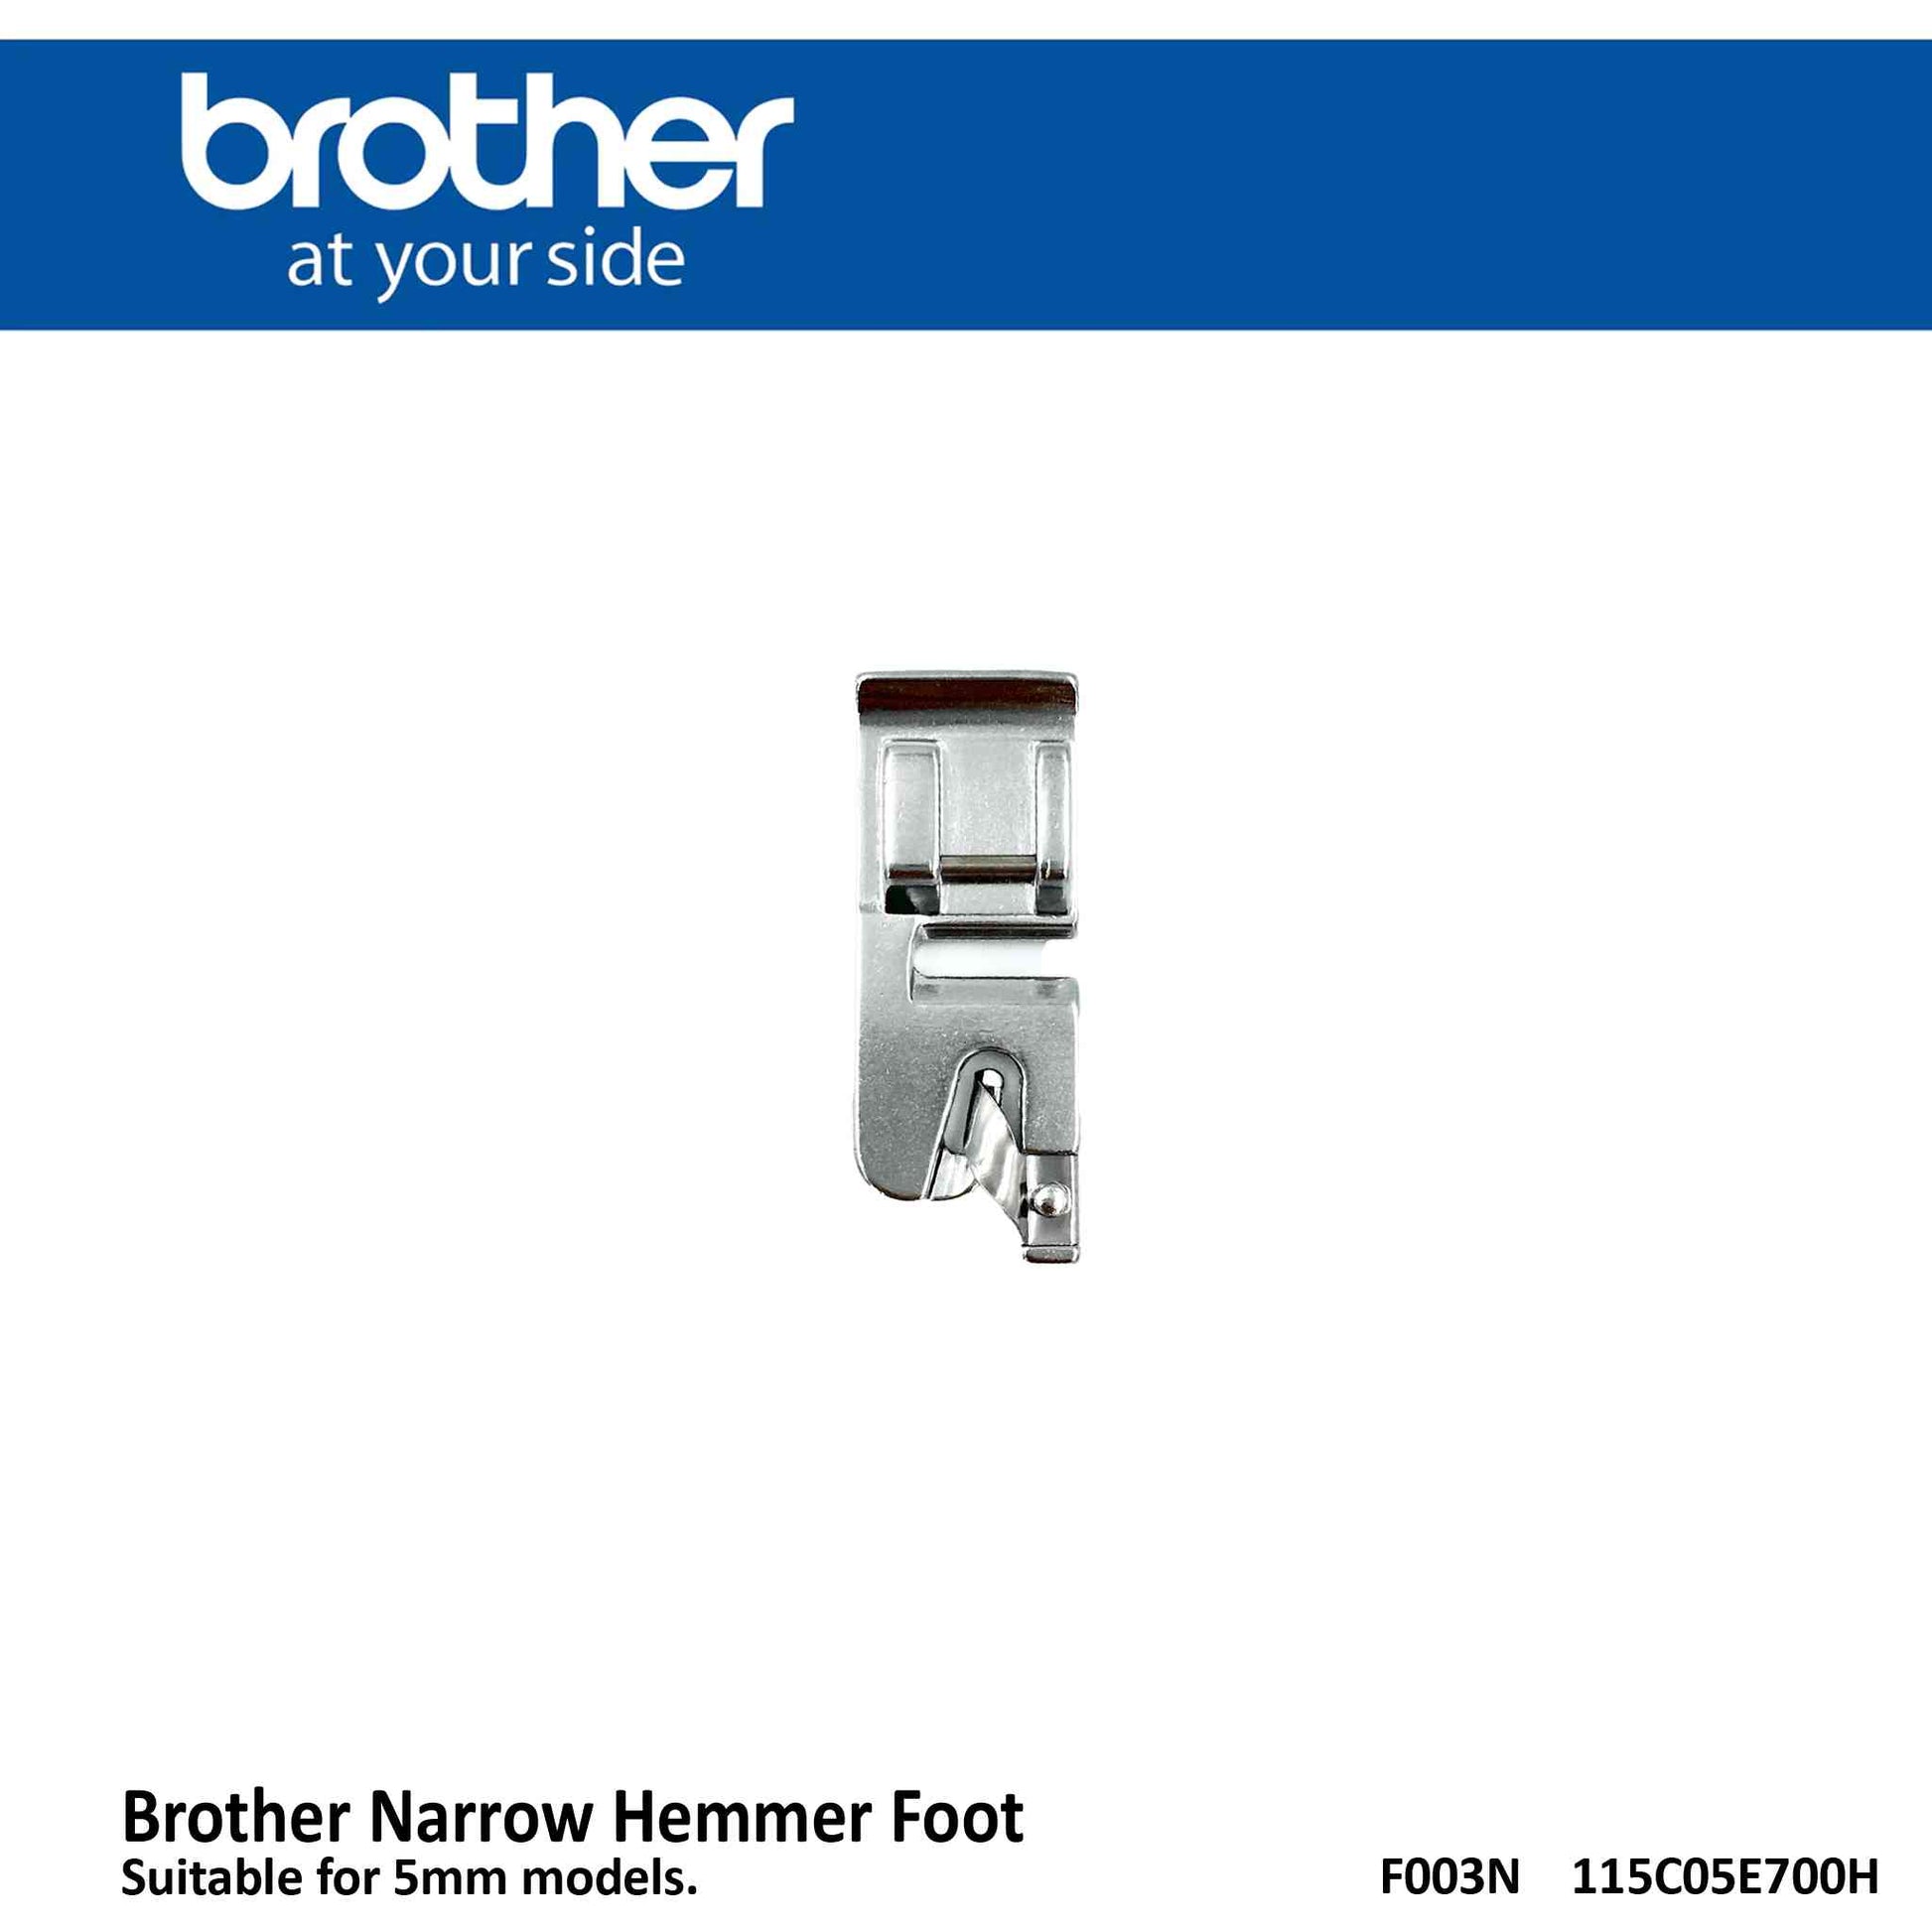 F003N - Brother narrow hemmer foot - 5mm – The Handzon Shop